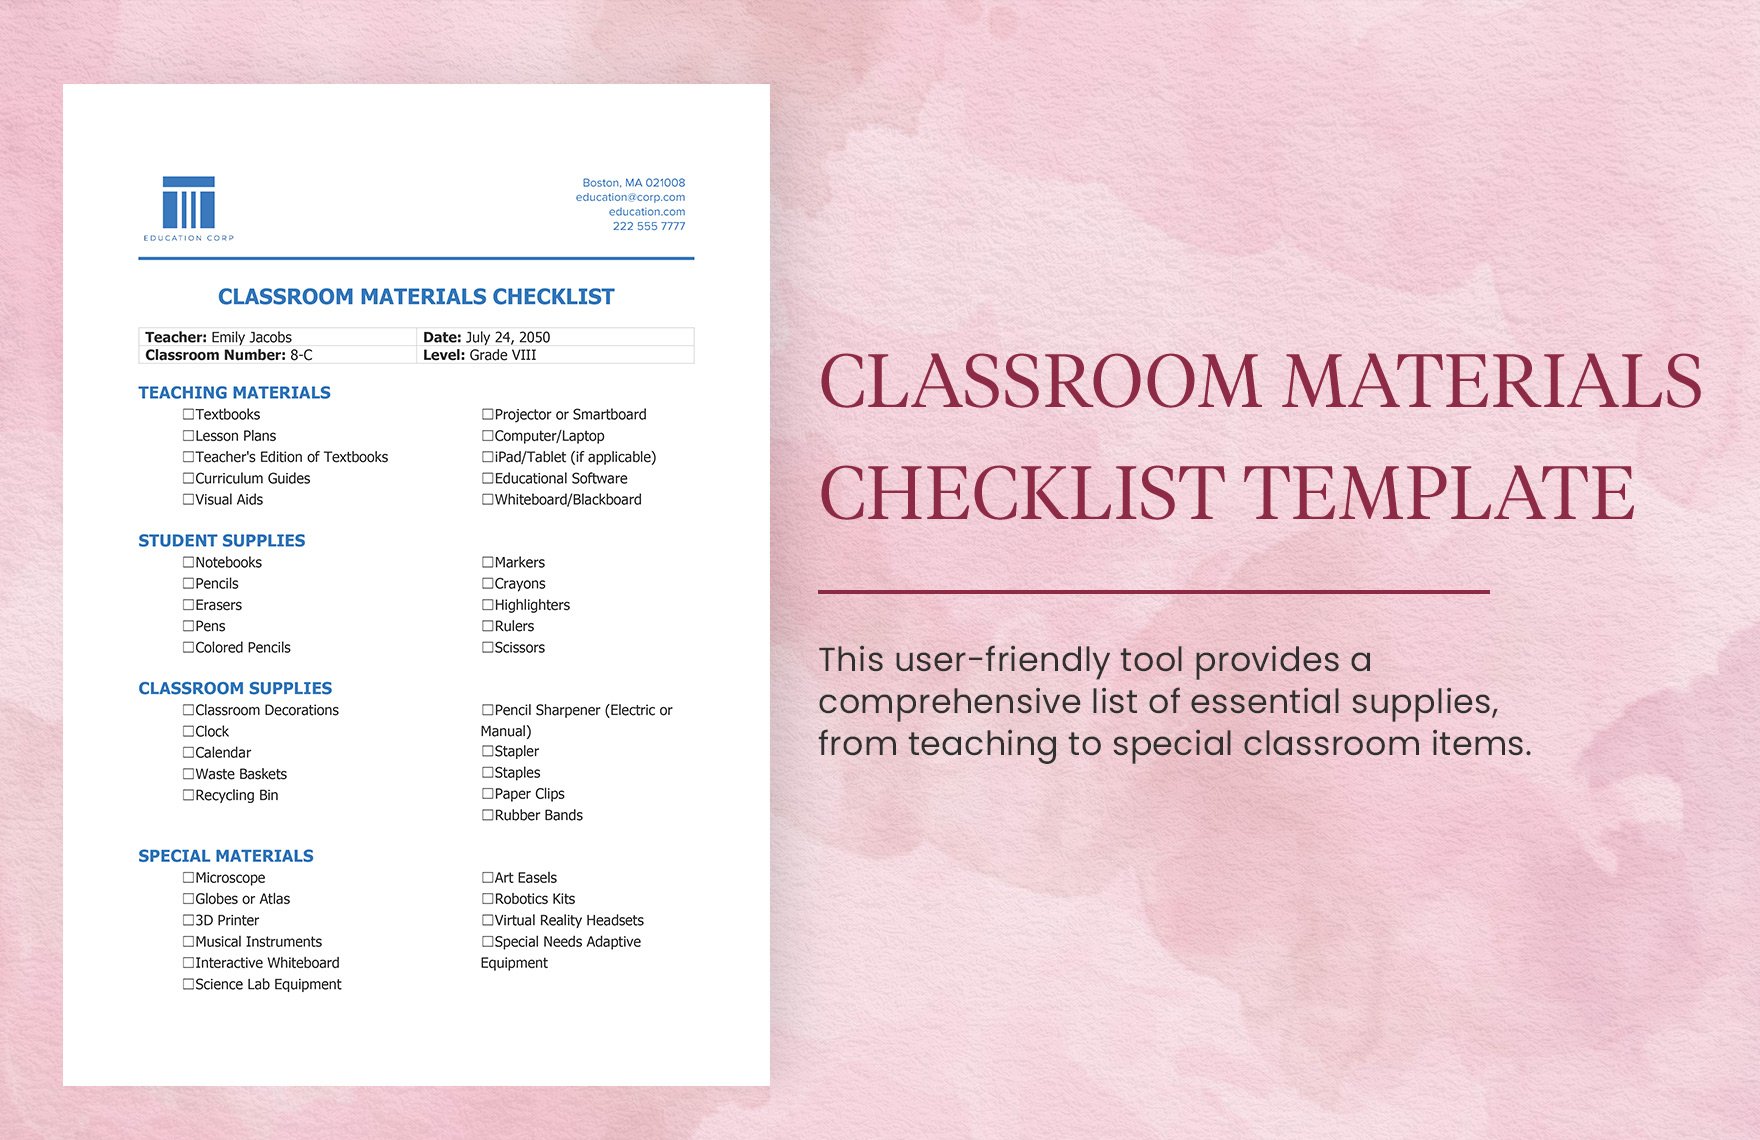 Classroom Materials Checklist Template in Word, Google Docs, PDF